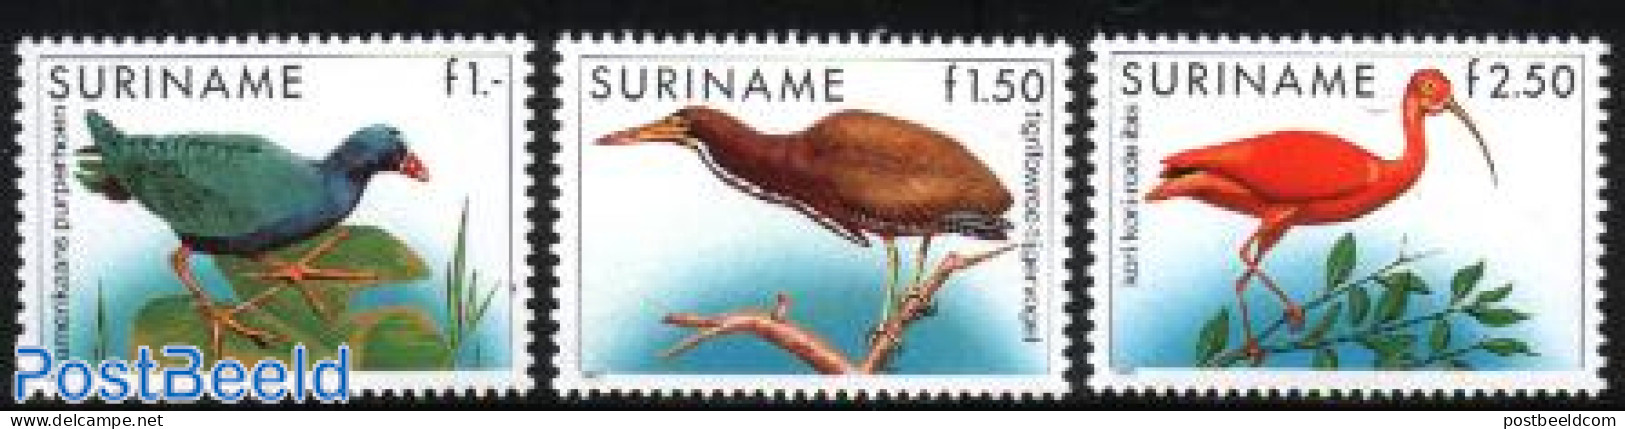 Suriname, Republic 1985 Definitives, Birds 3v, Mint NH, Nature - Birds - Suriname